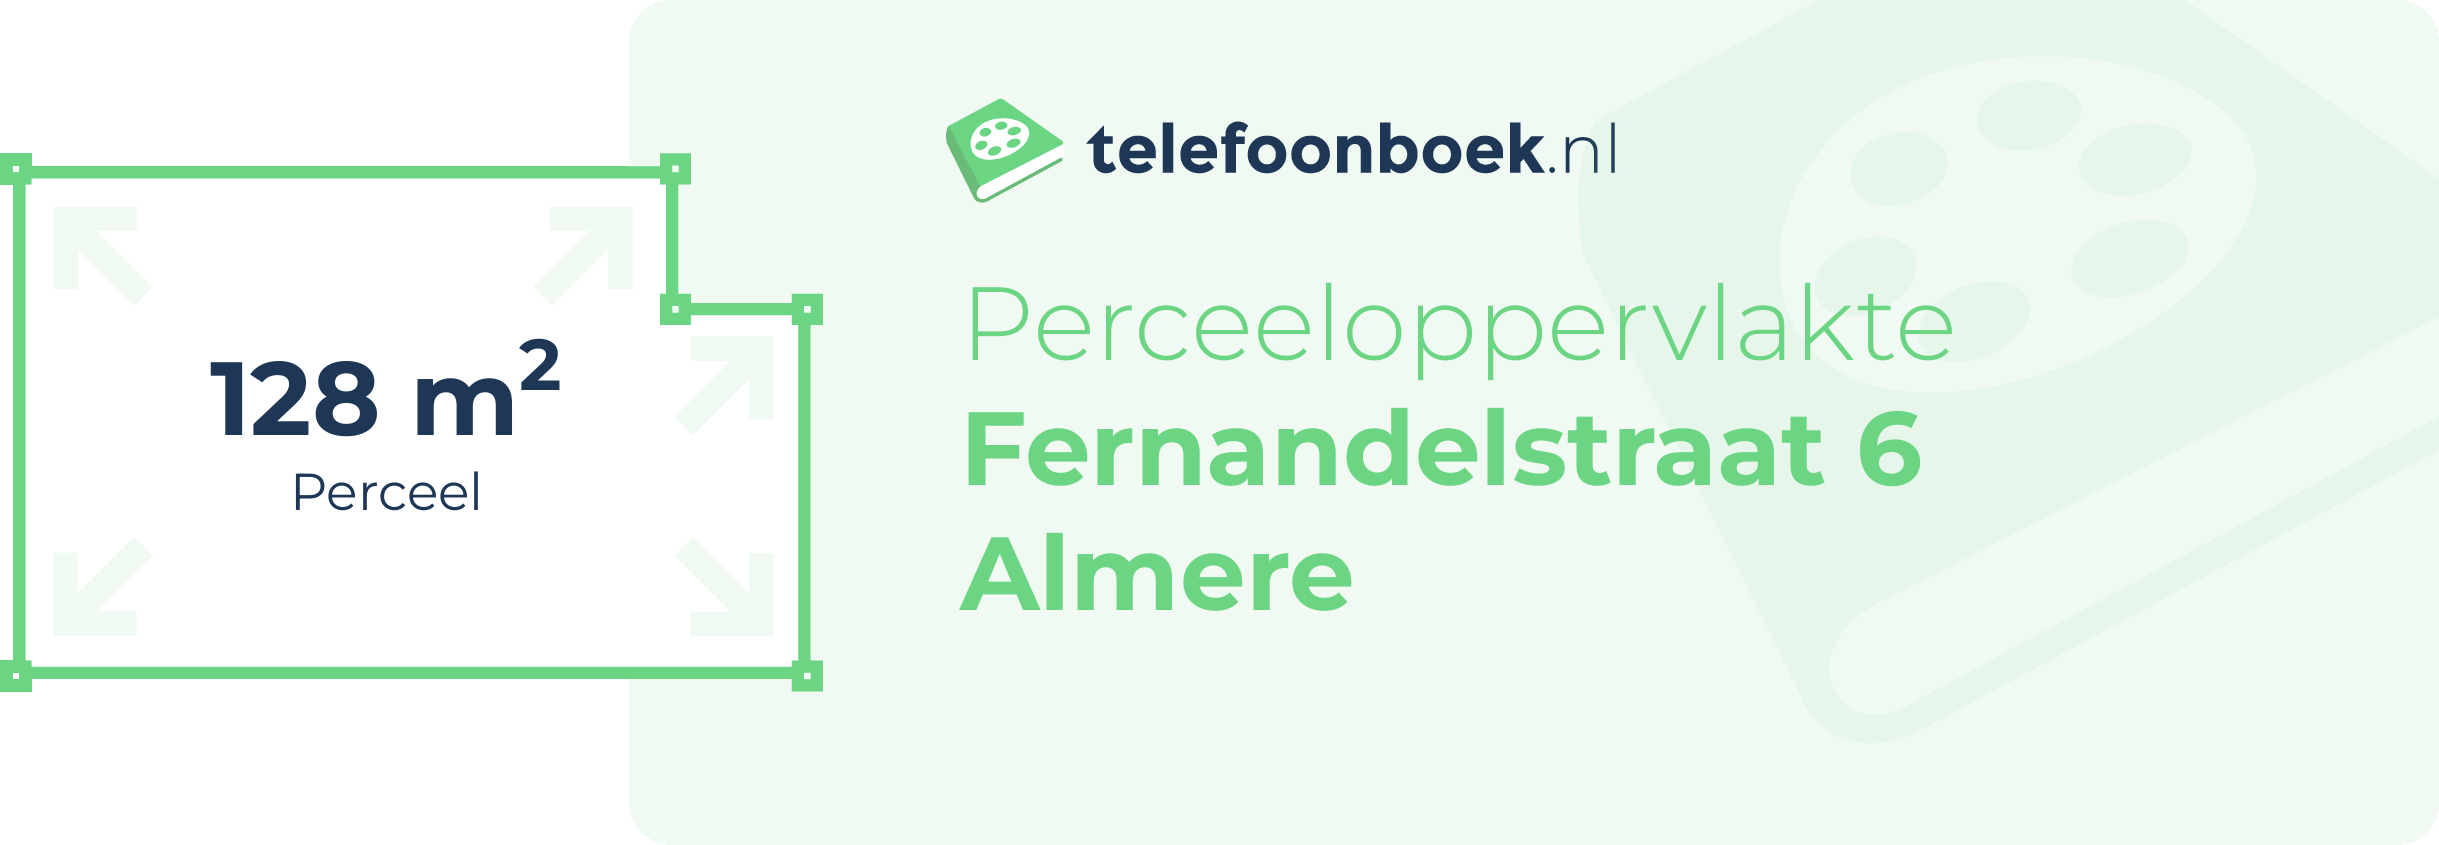 Perceeloppervlakte Fernandelstraat 6 Almere